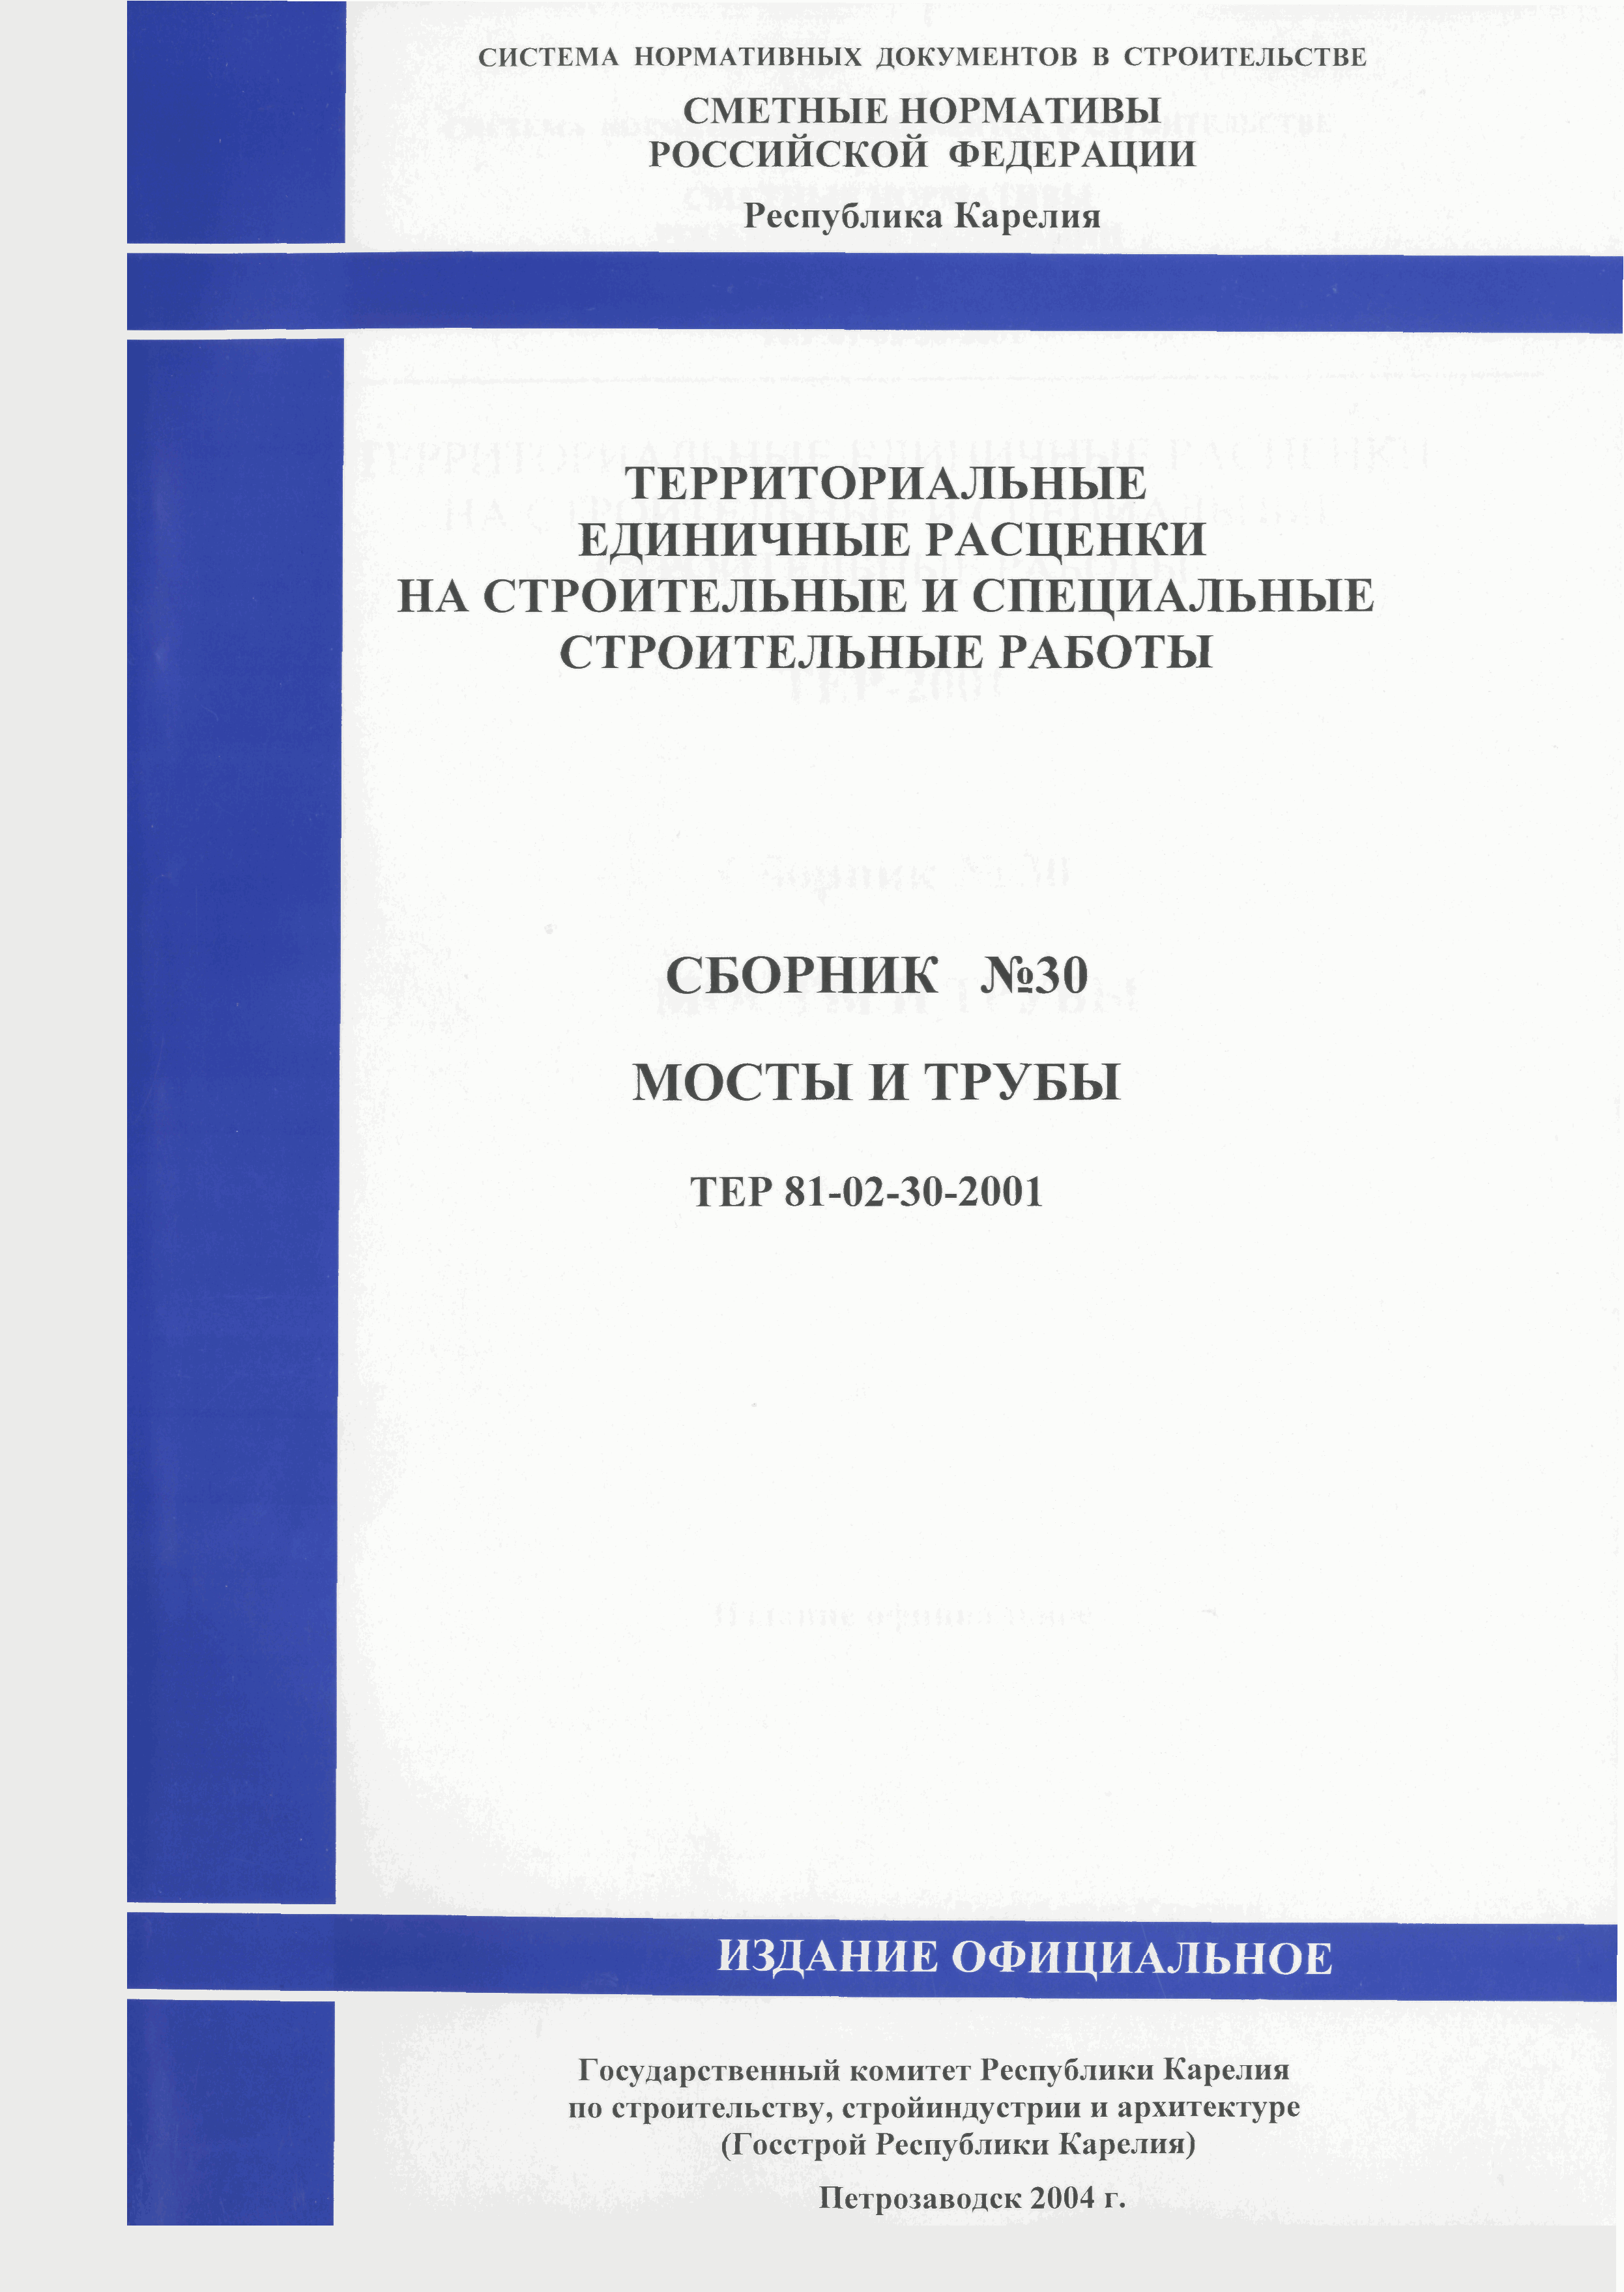 ТЕР Республика Карелия 2001-30